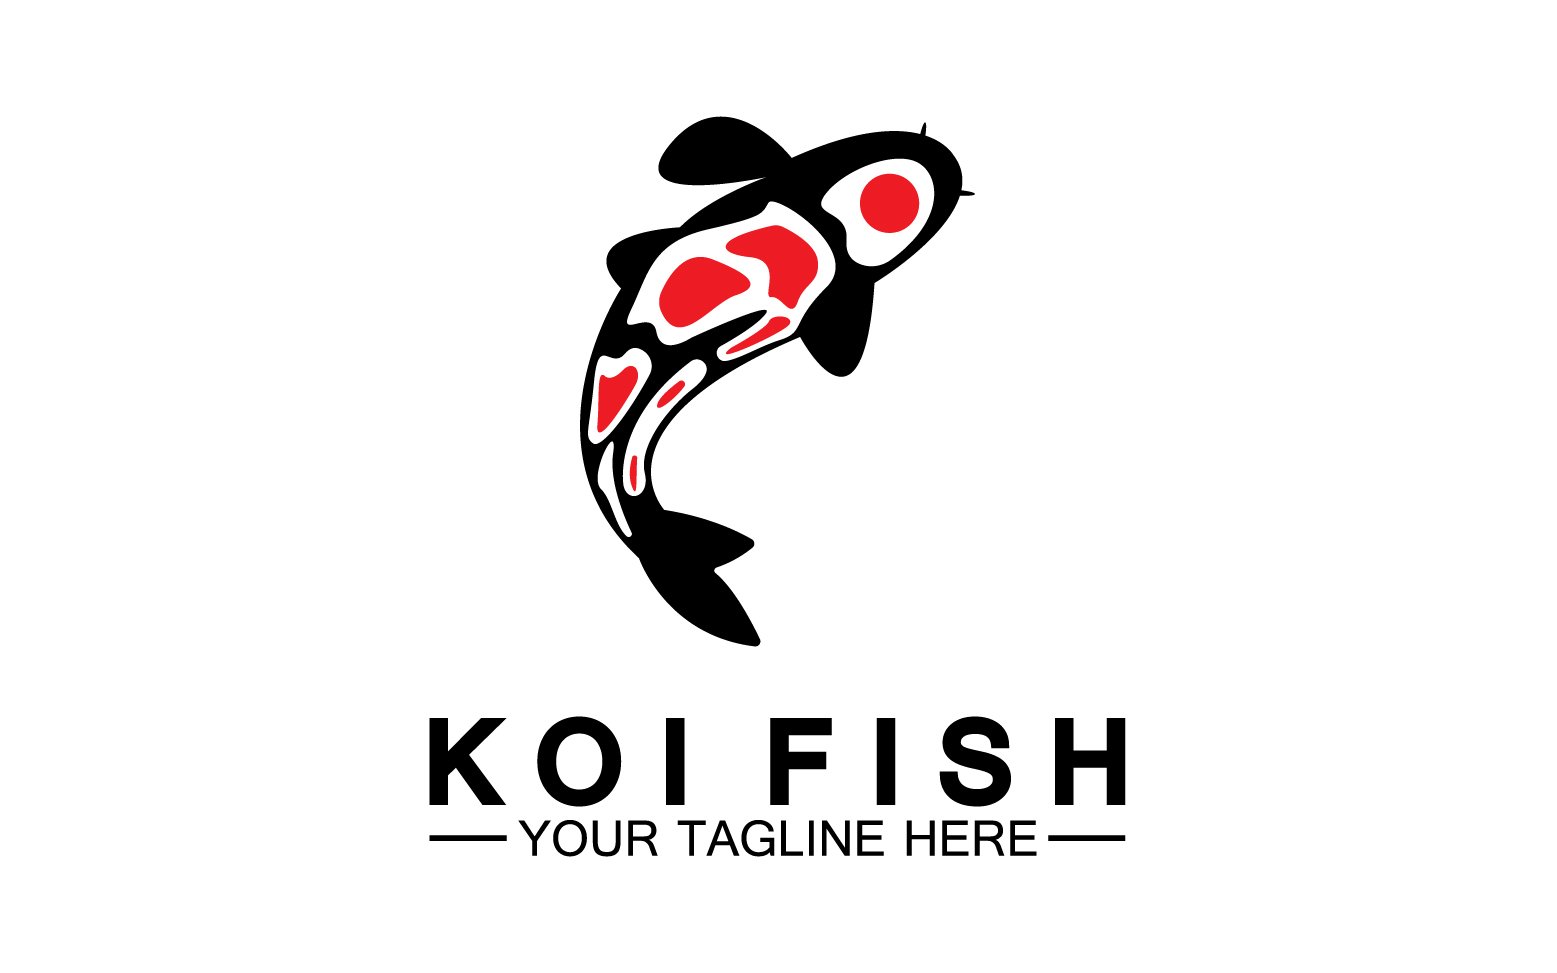 Fish koi black and red icon logo vector v24